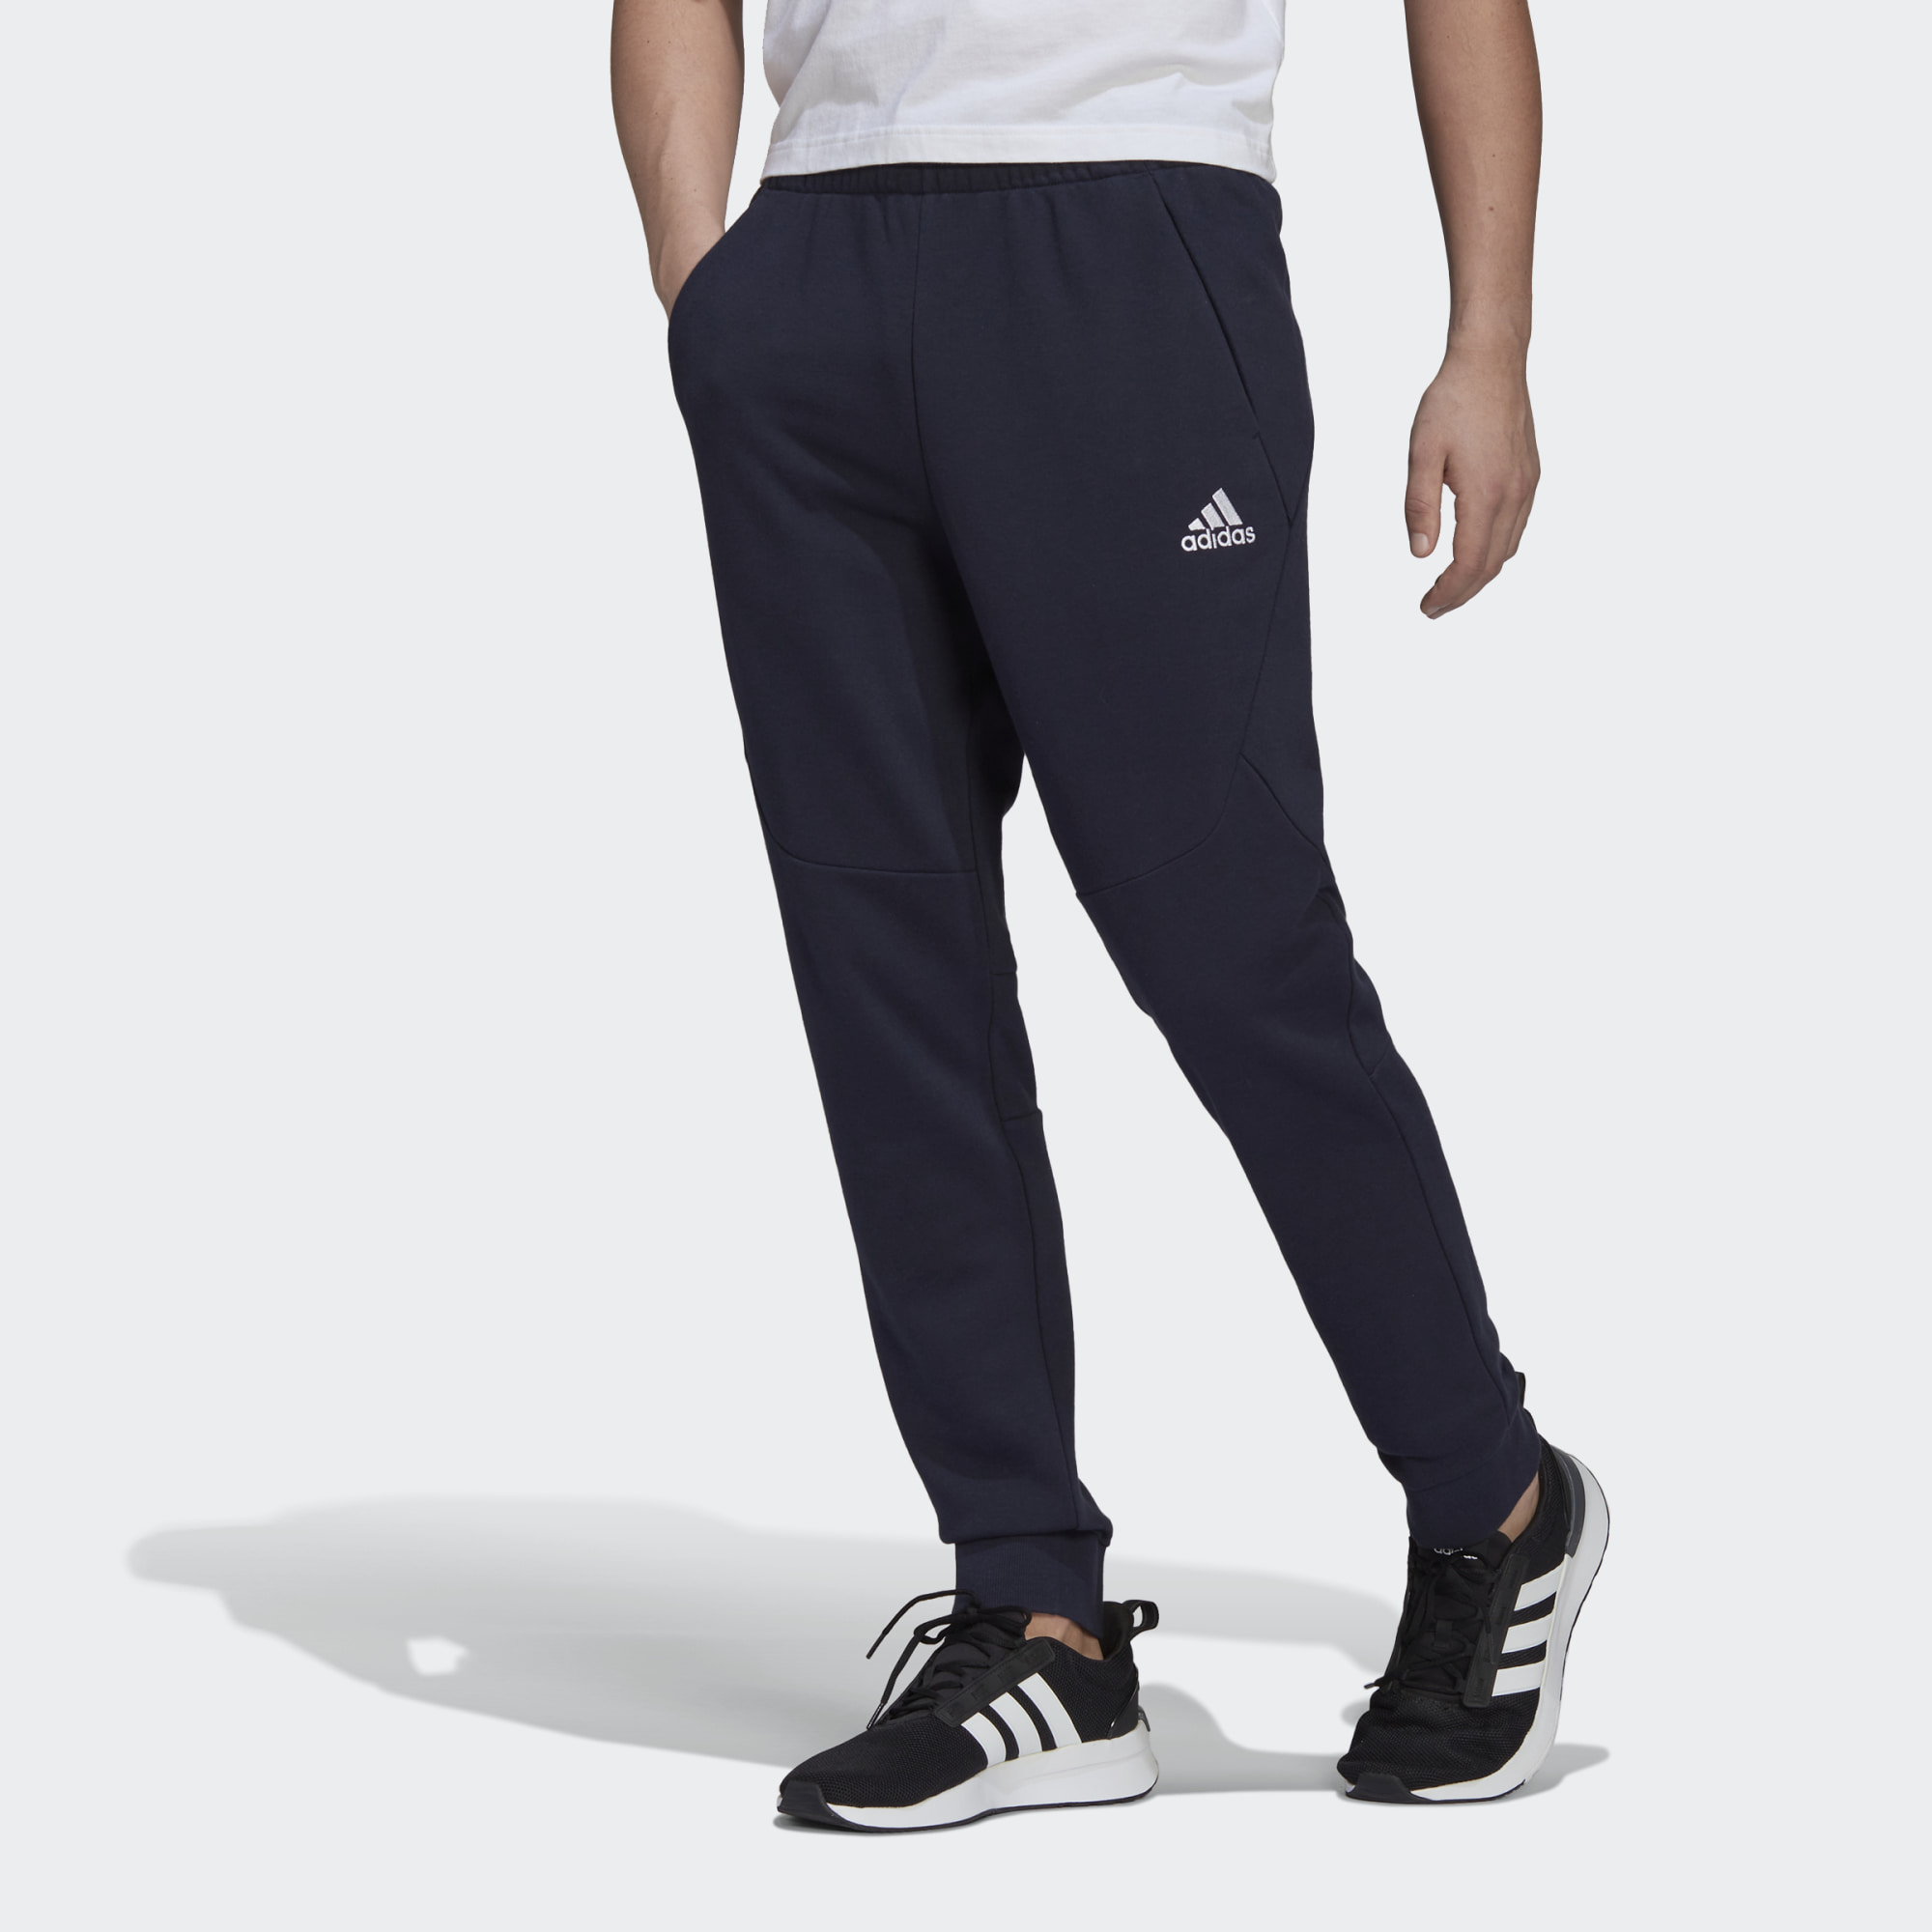 фото Спортивные брюки мужские adidas m gmdy pant синие xl